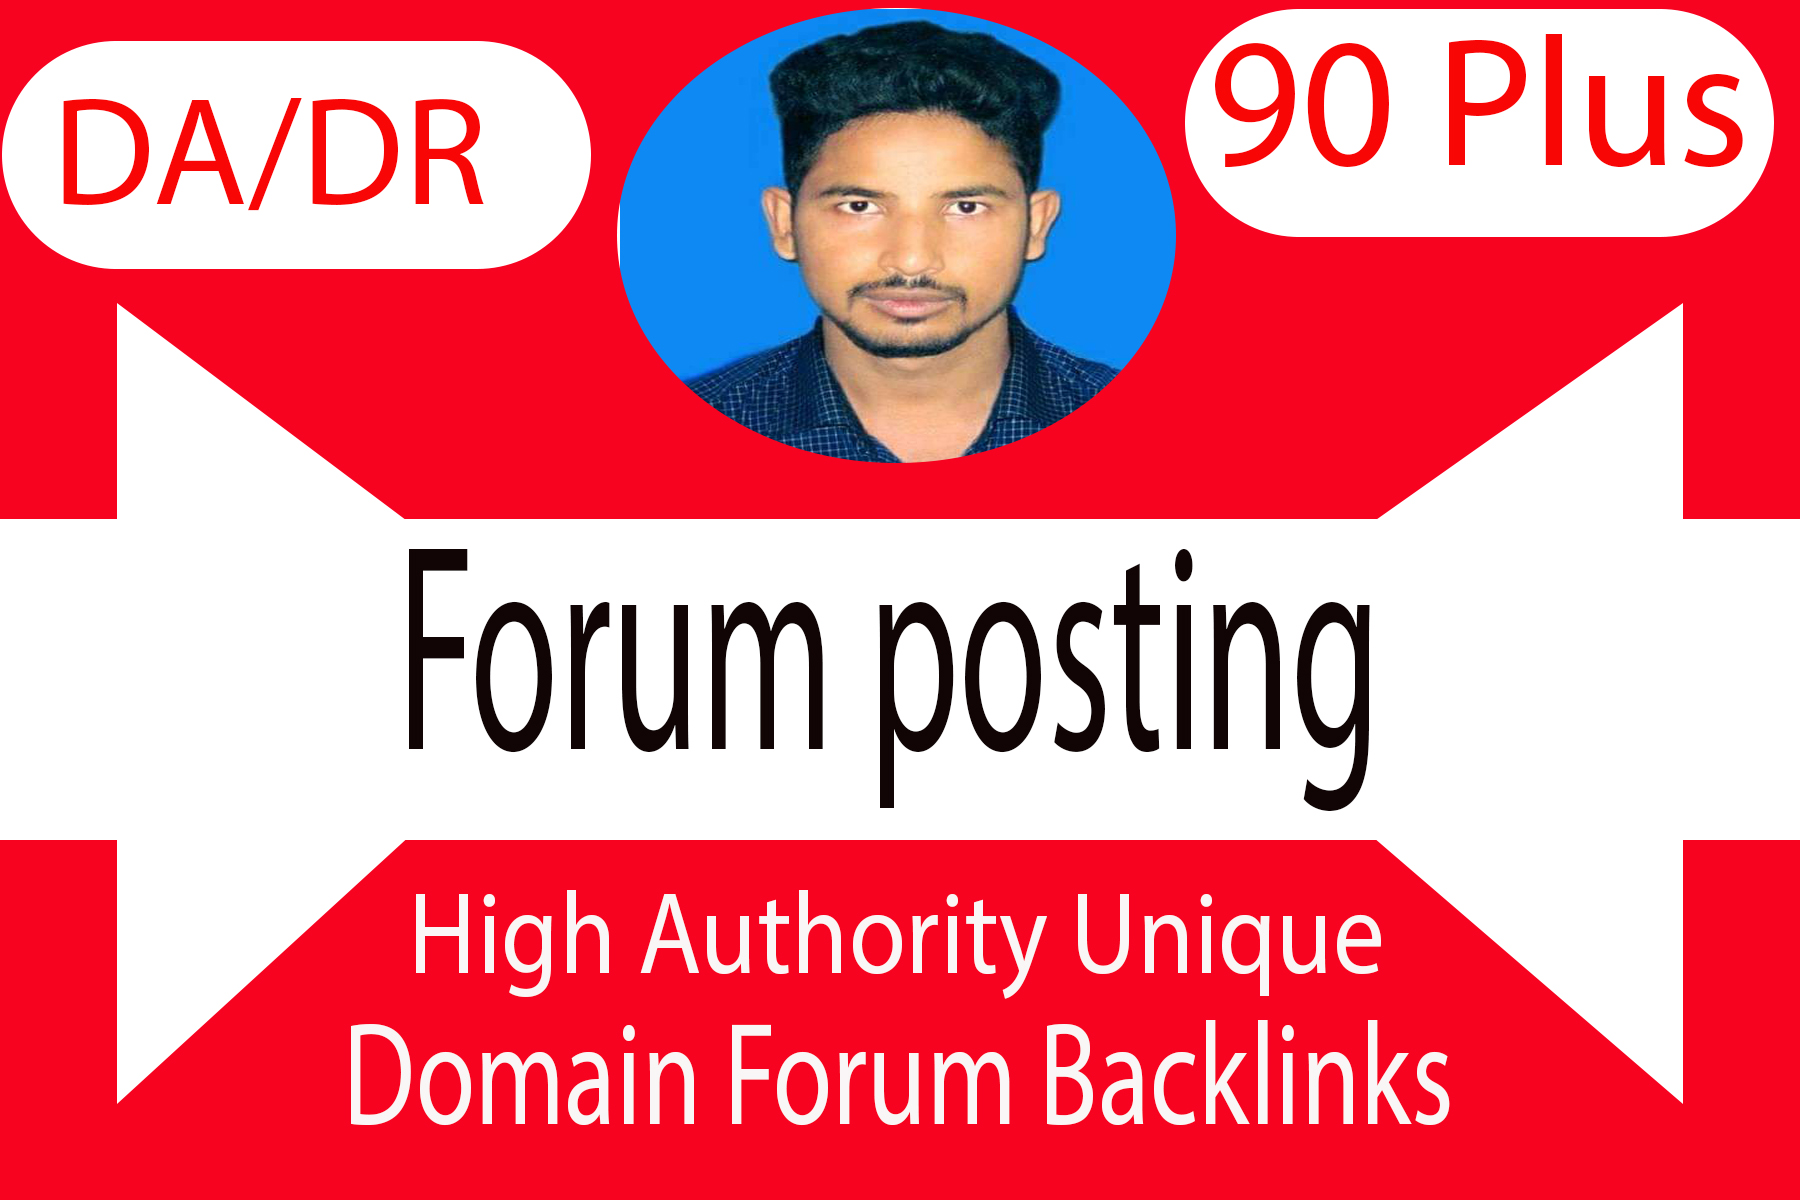 Manually provide 50 high quality forum posting backlinks